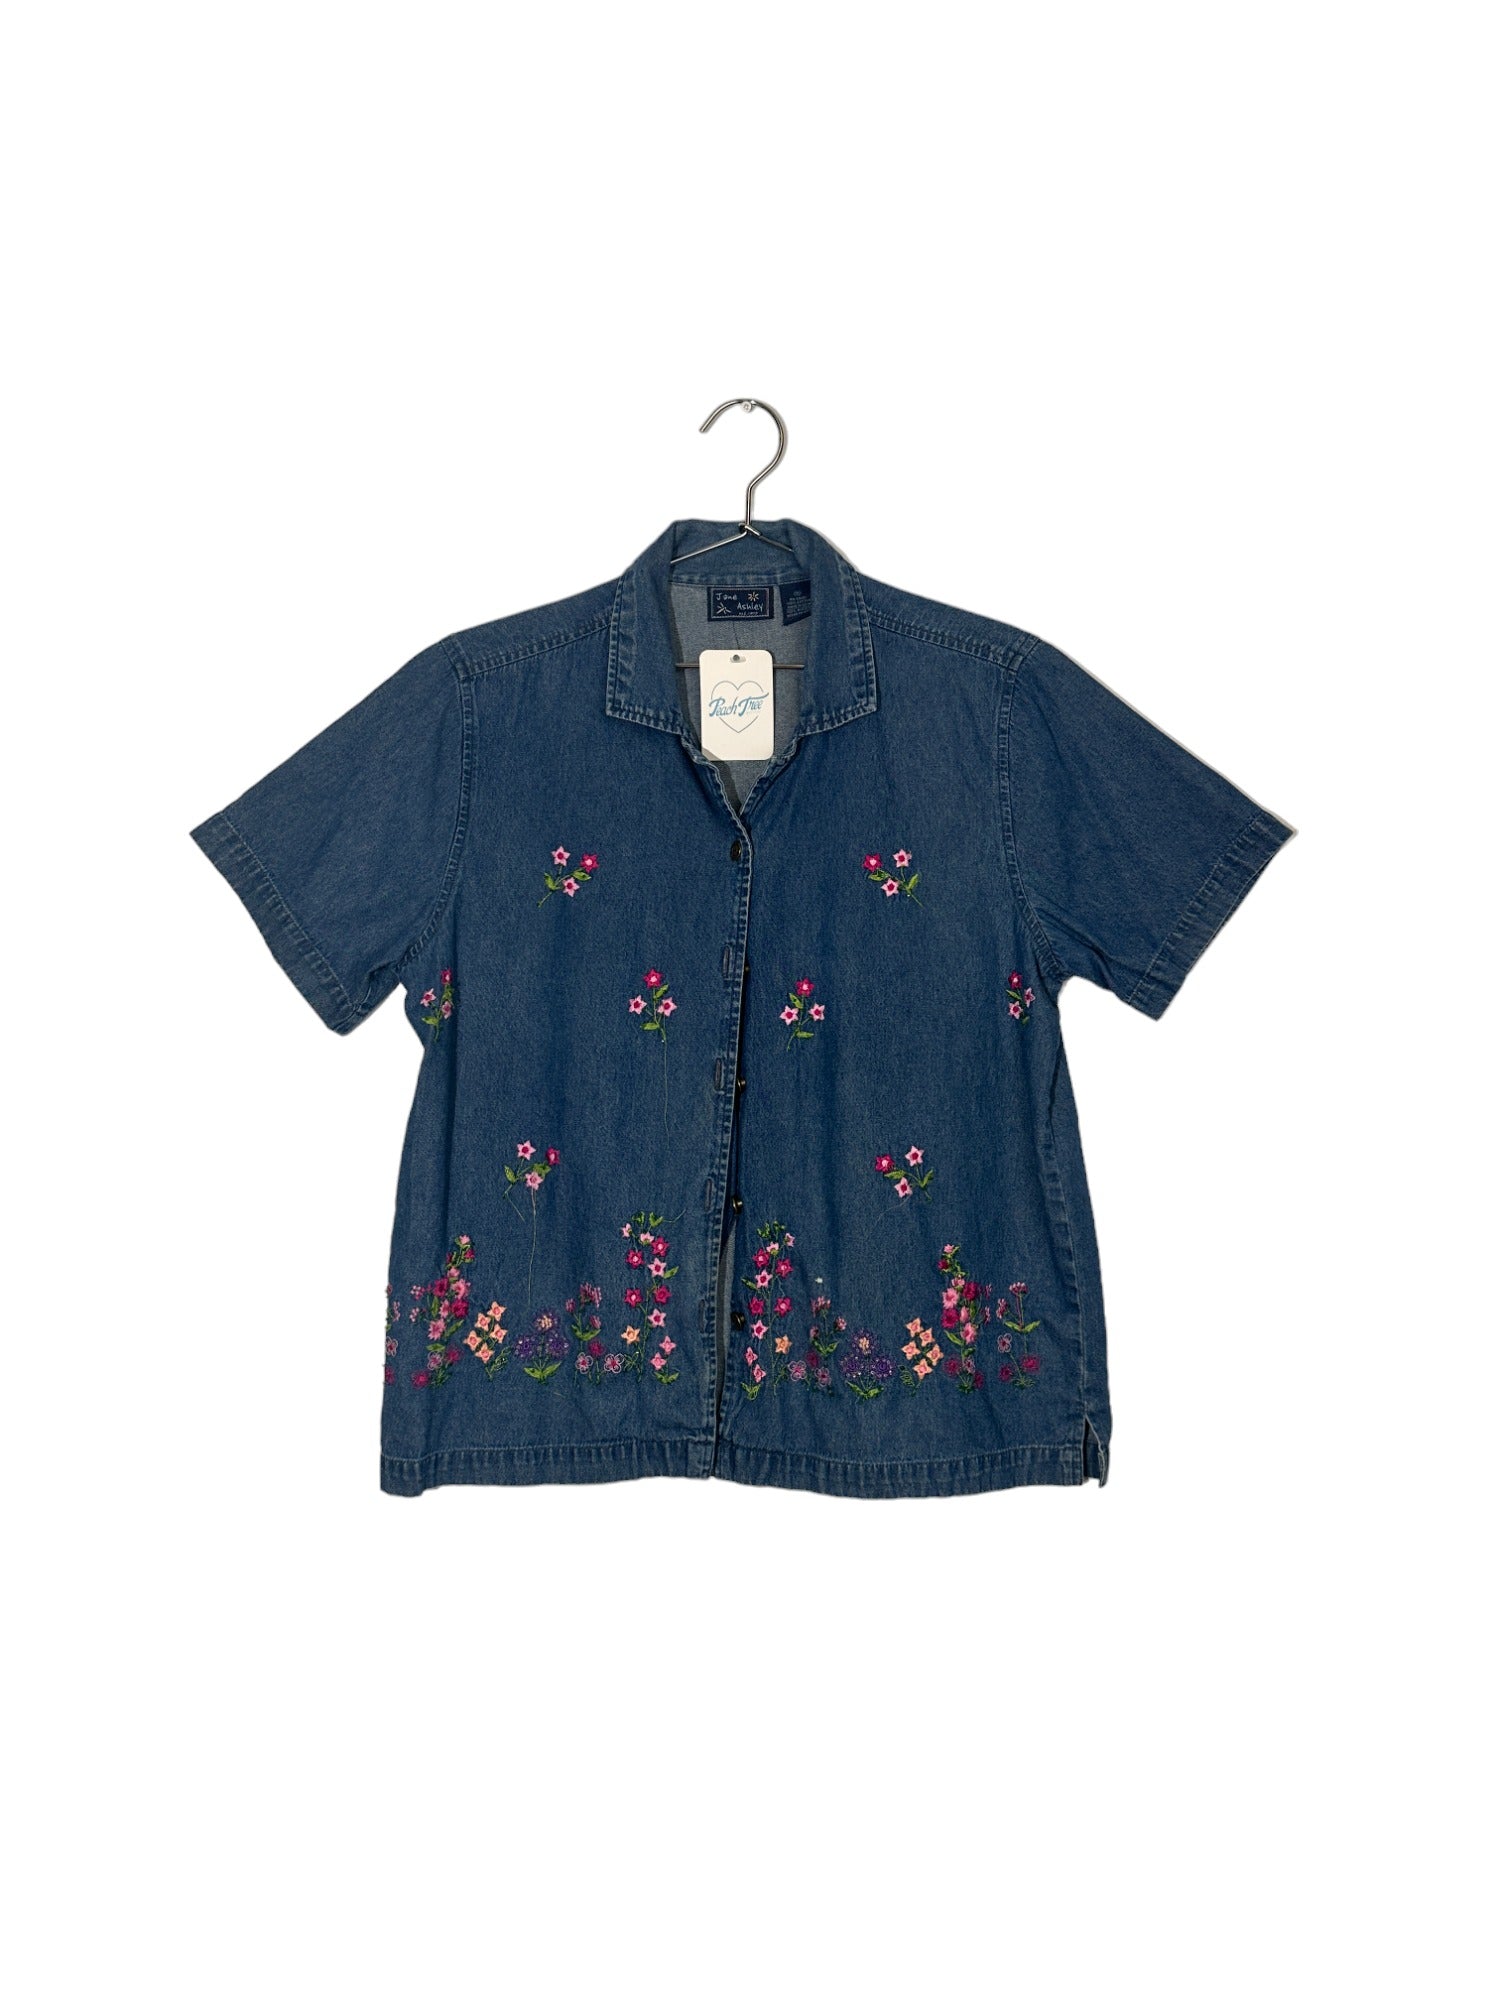 Blue Denim Flower Embroidered Button Up Shirt